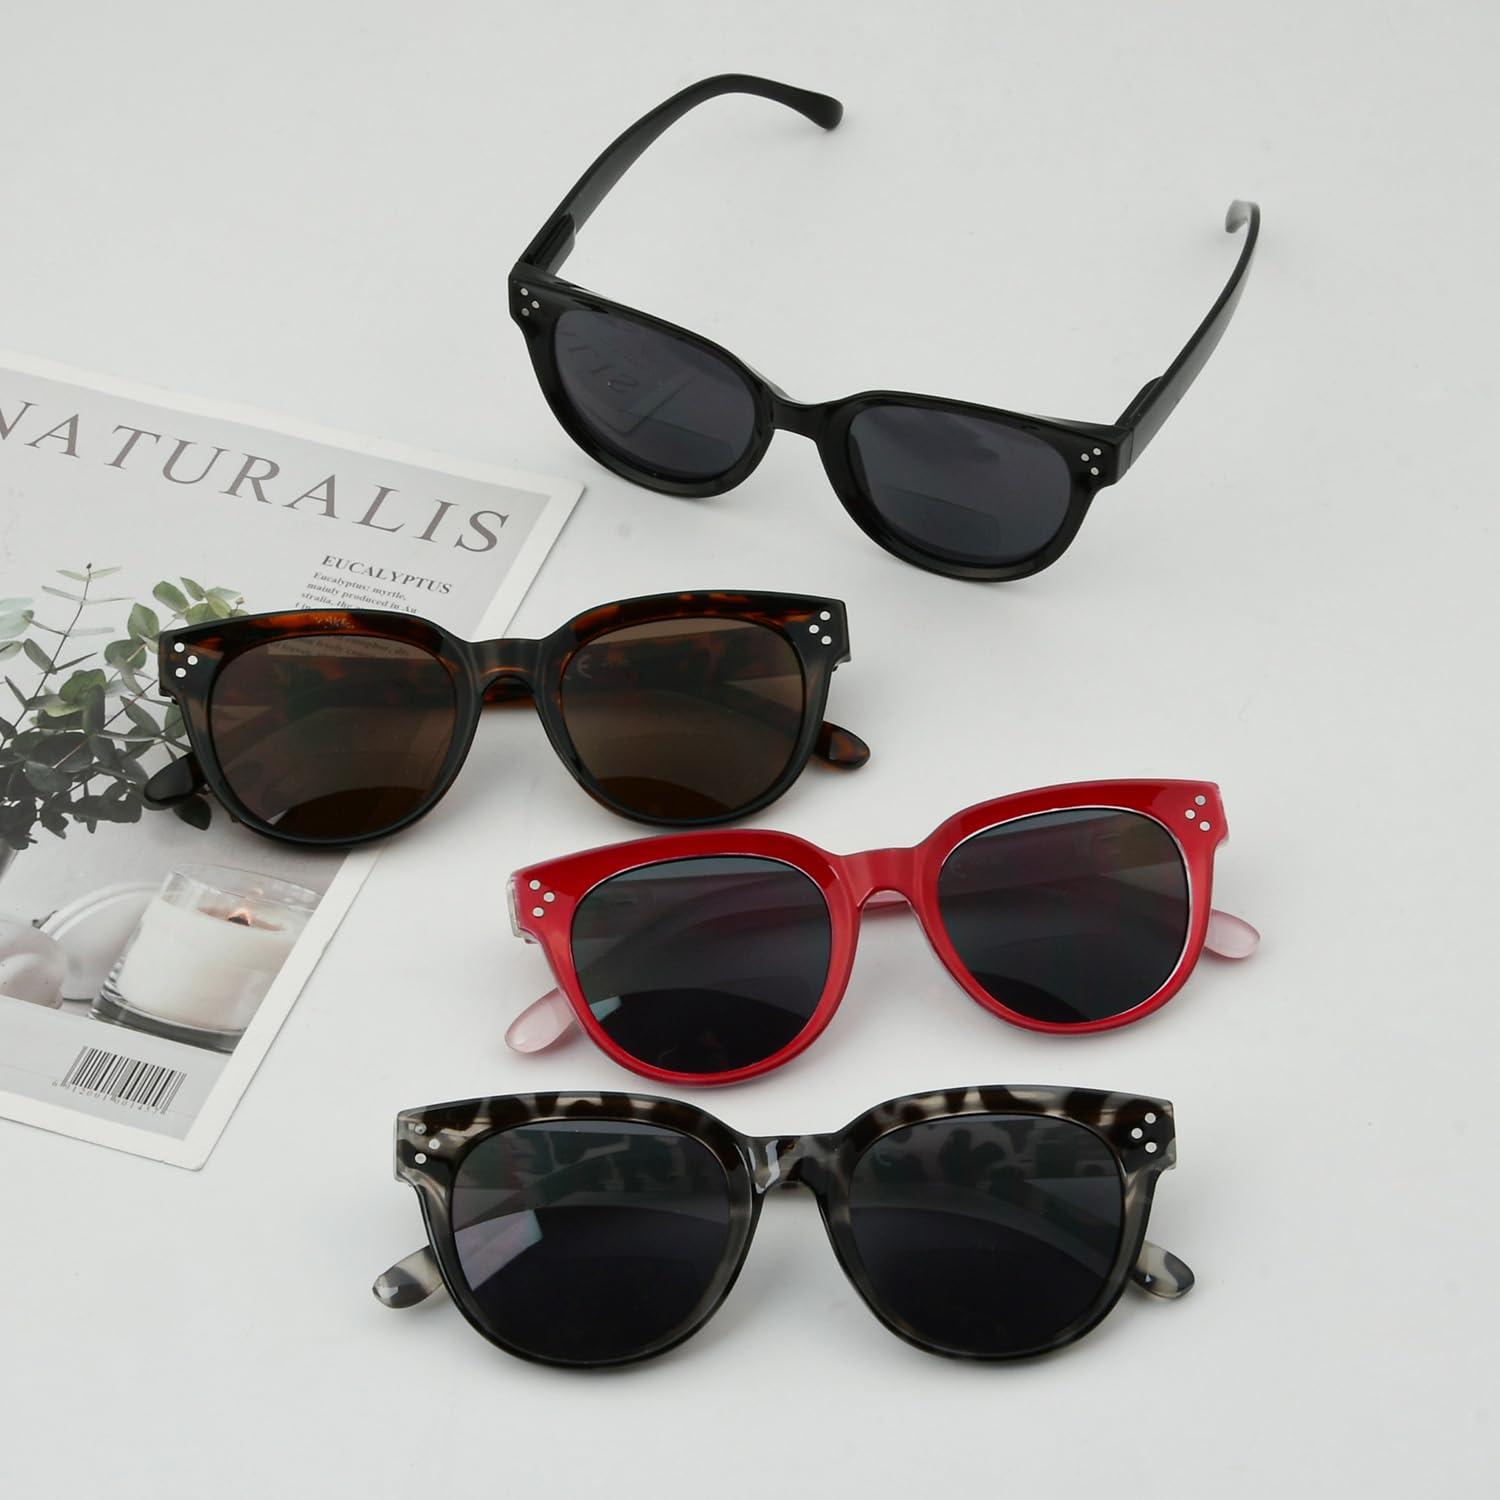 Eyekepper Bifocal Glasses for Women Reading under the Sun Stylish Bifocal Readers Tinted Lens - Red +3.00 8